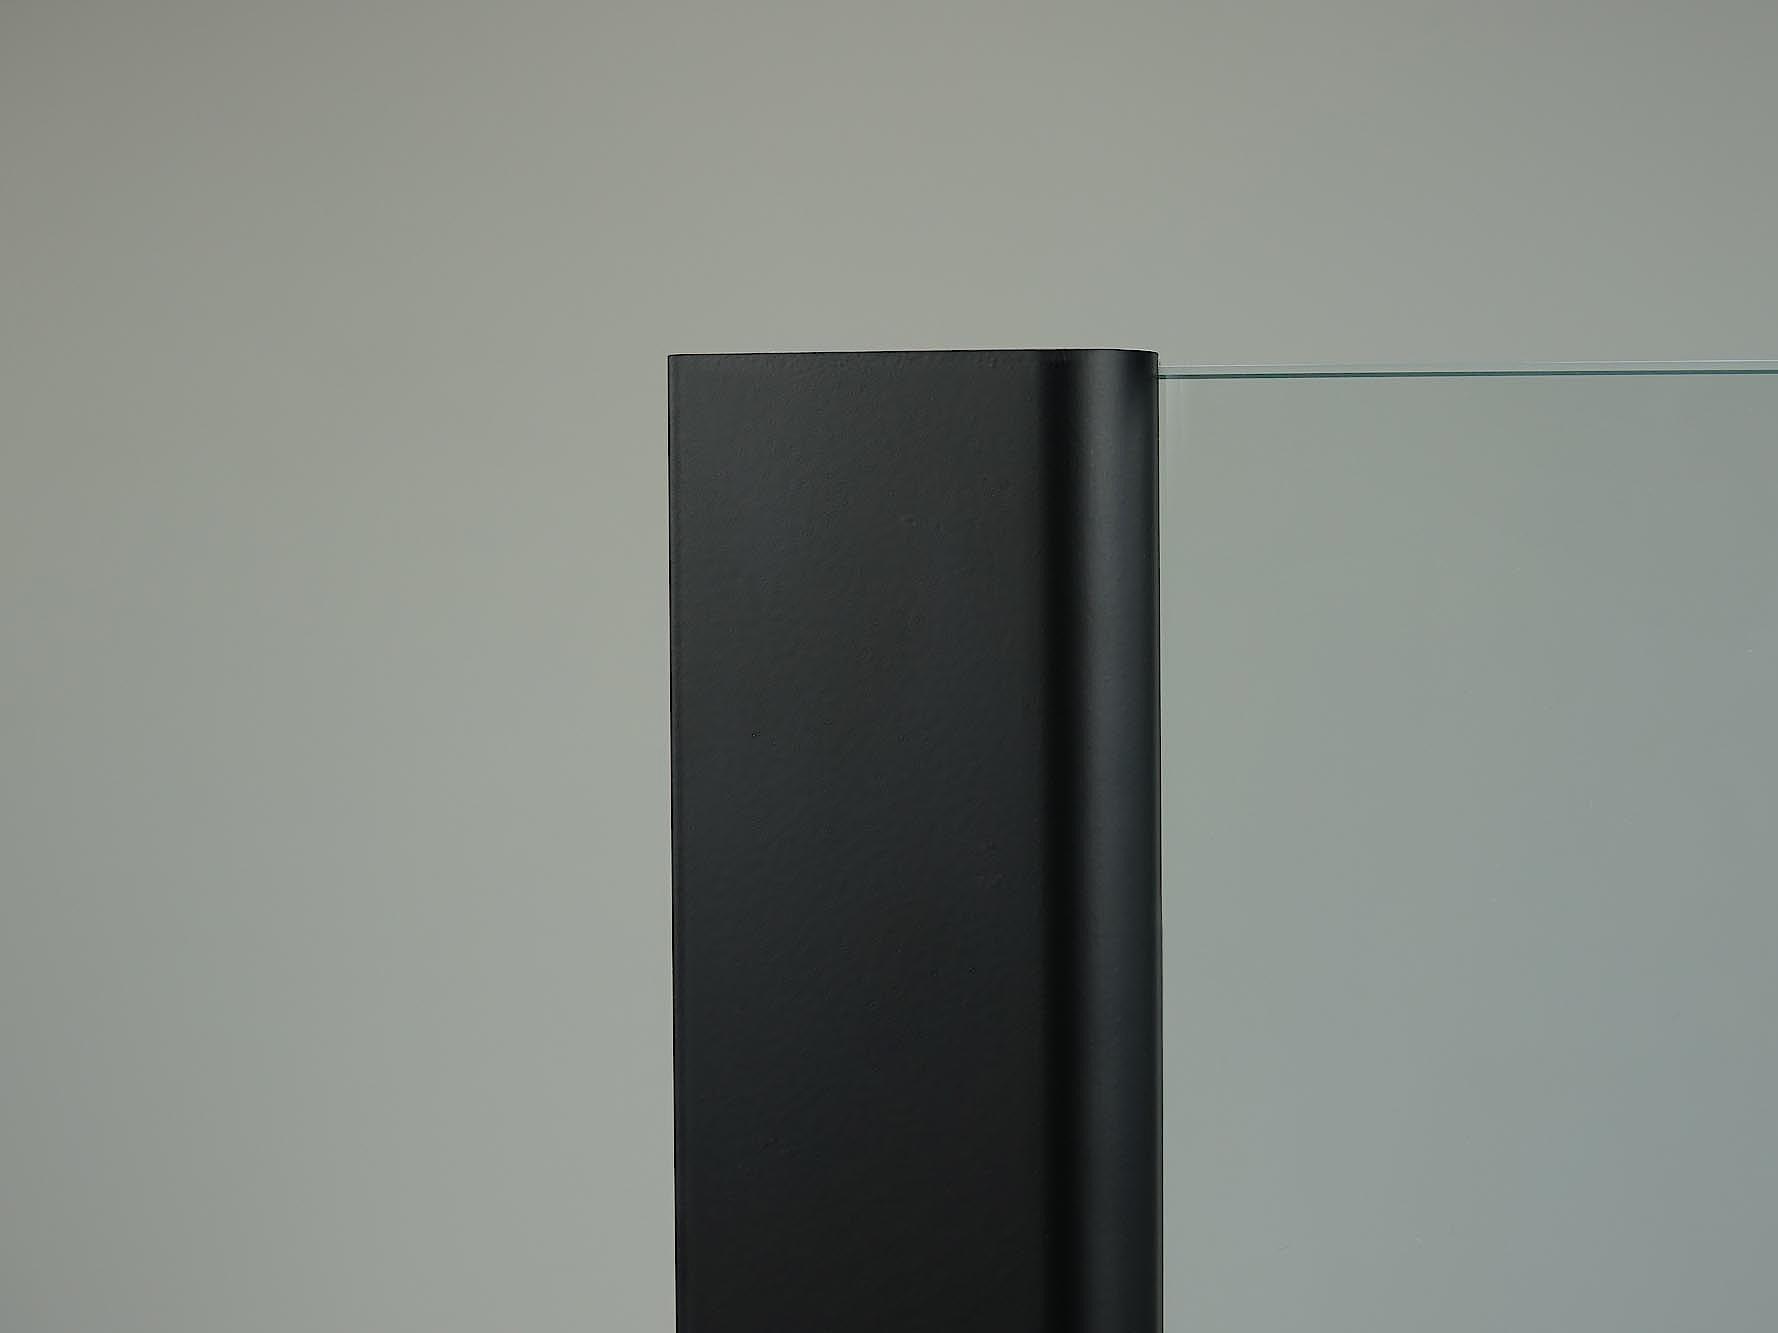 Kermi shower enclosure, wall profile surface Black Soft RAL 9005